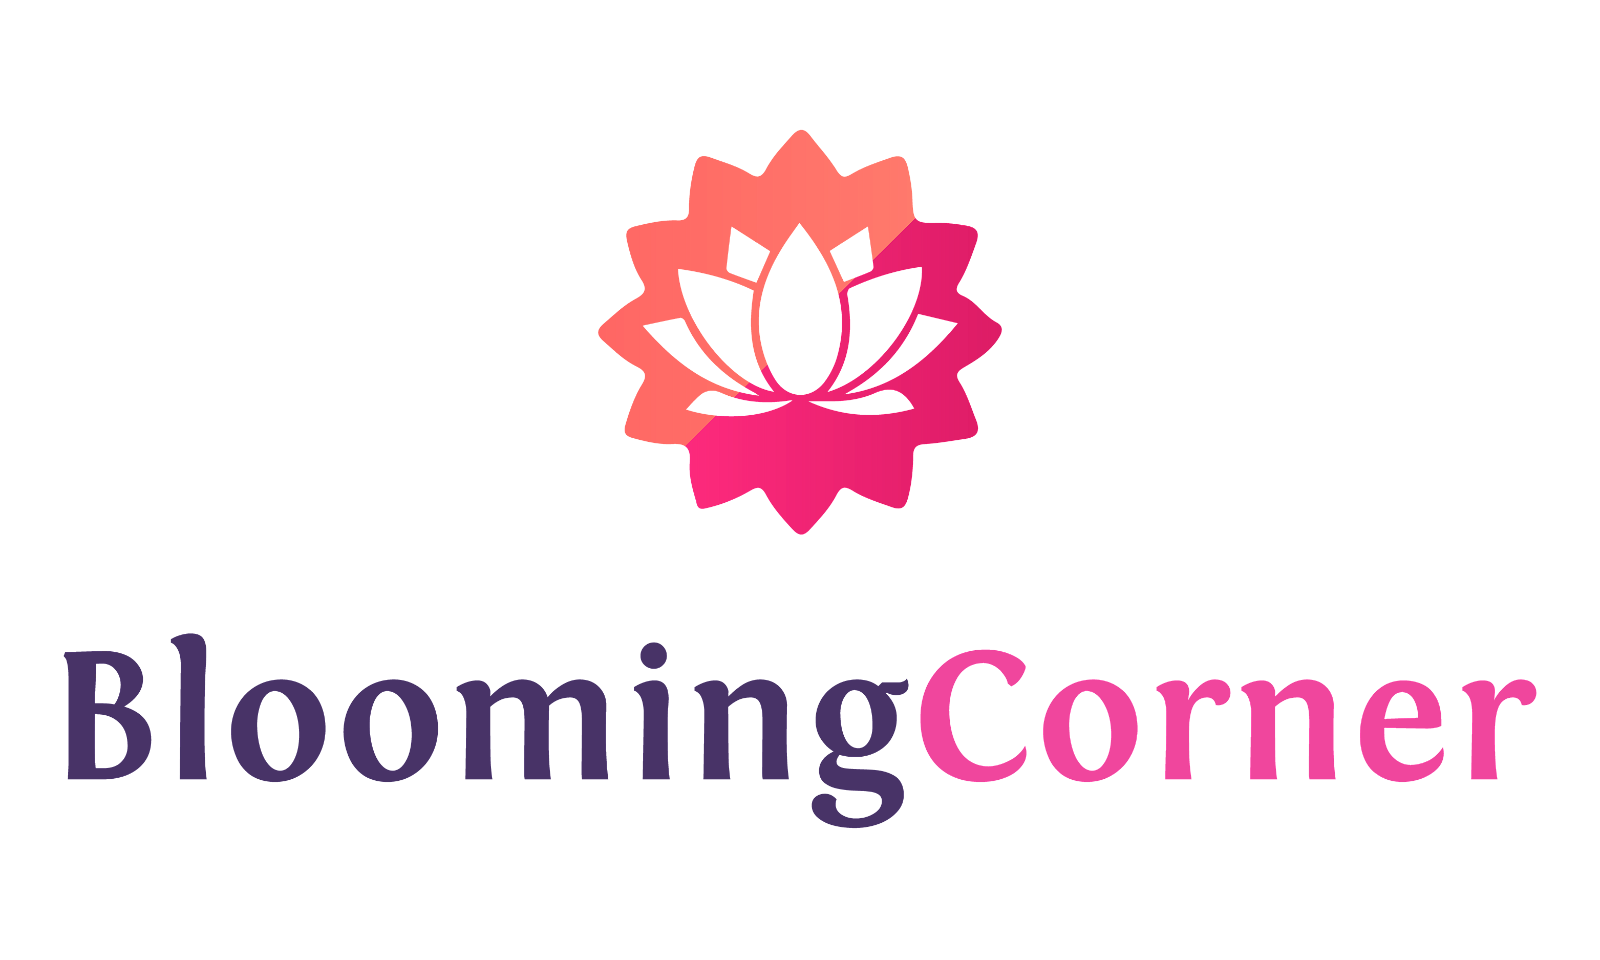 BloomingCorner.com - Creative brandable domain for sale